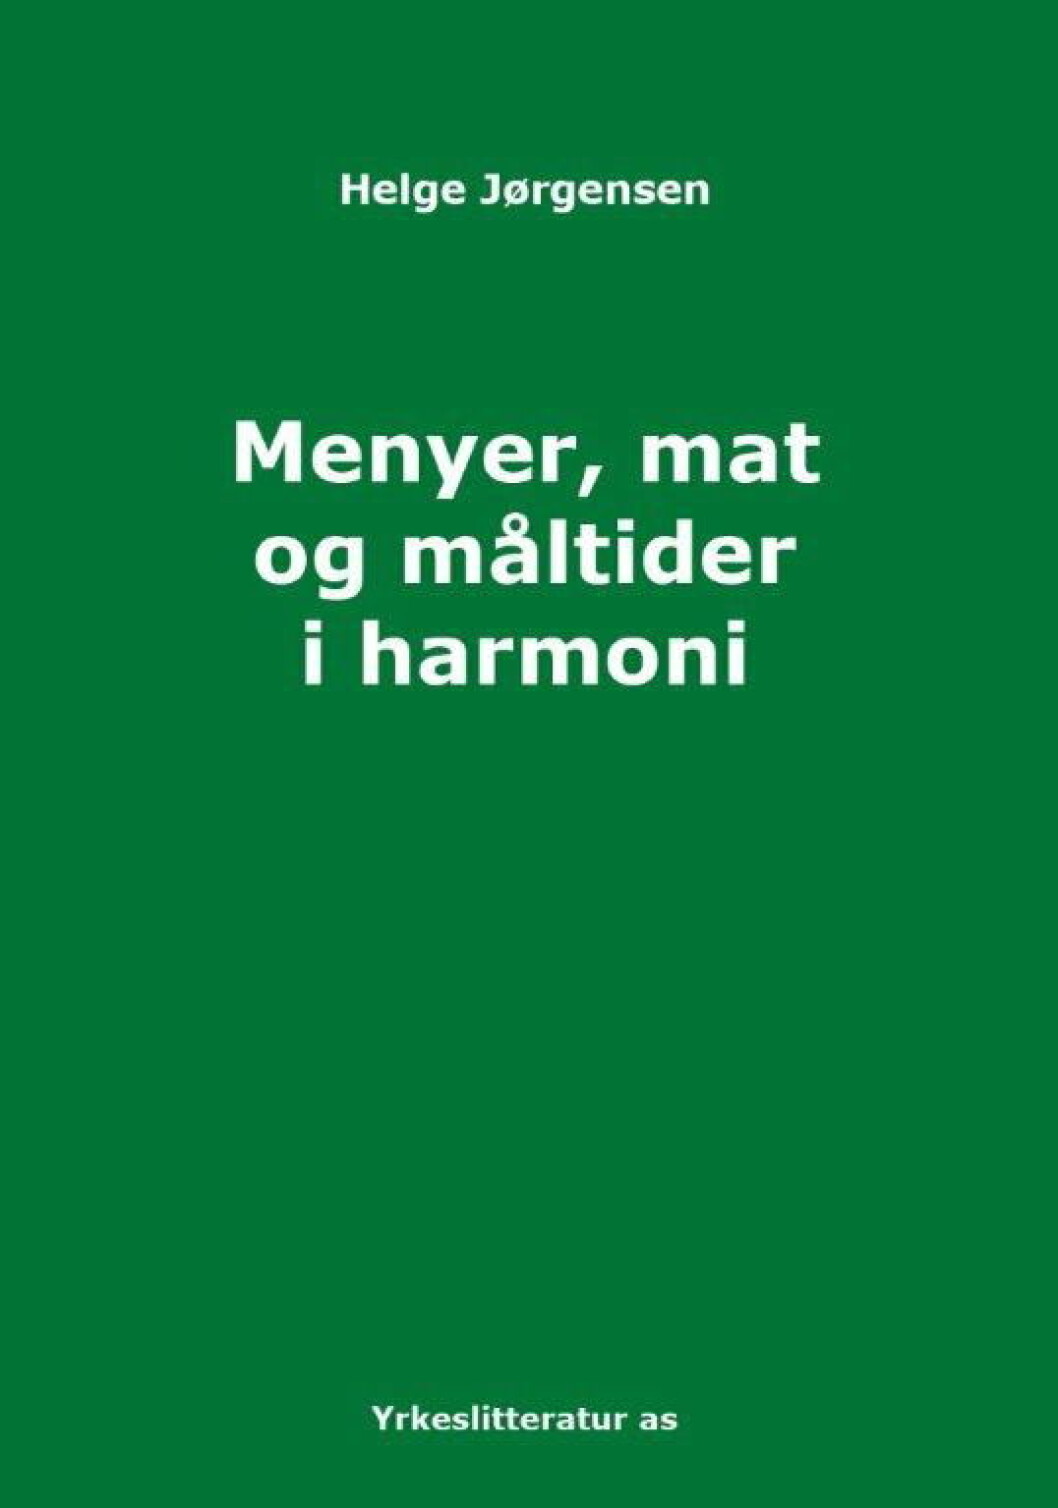 Omslag bok Helge Jørgensen-mat menyer